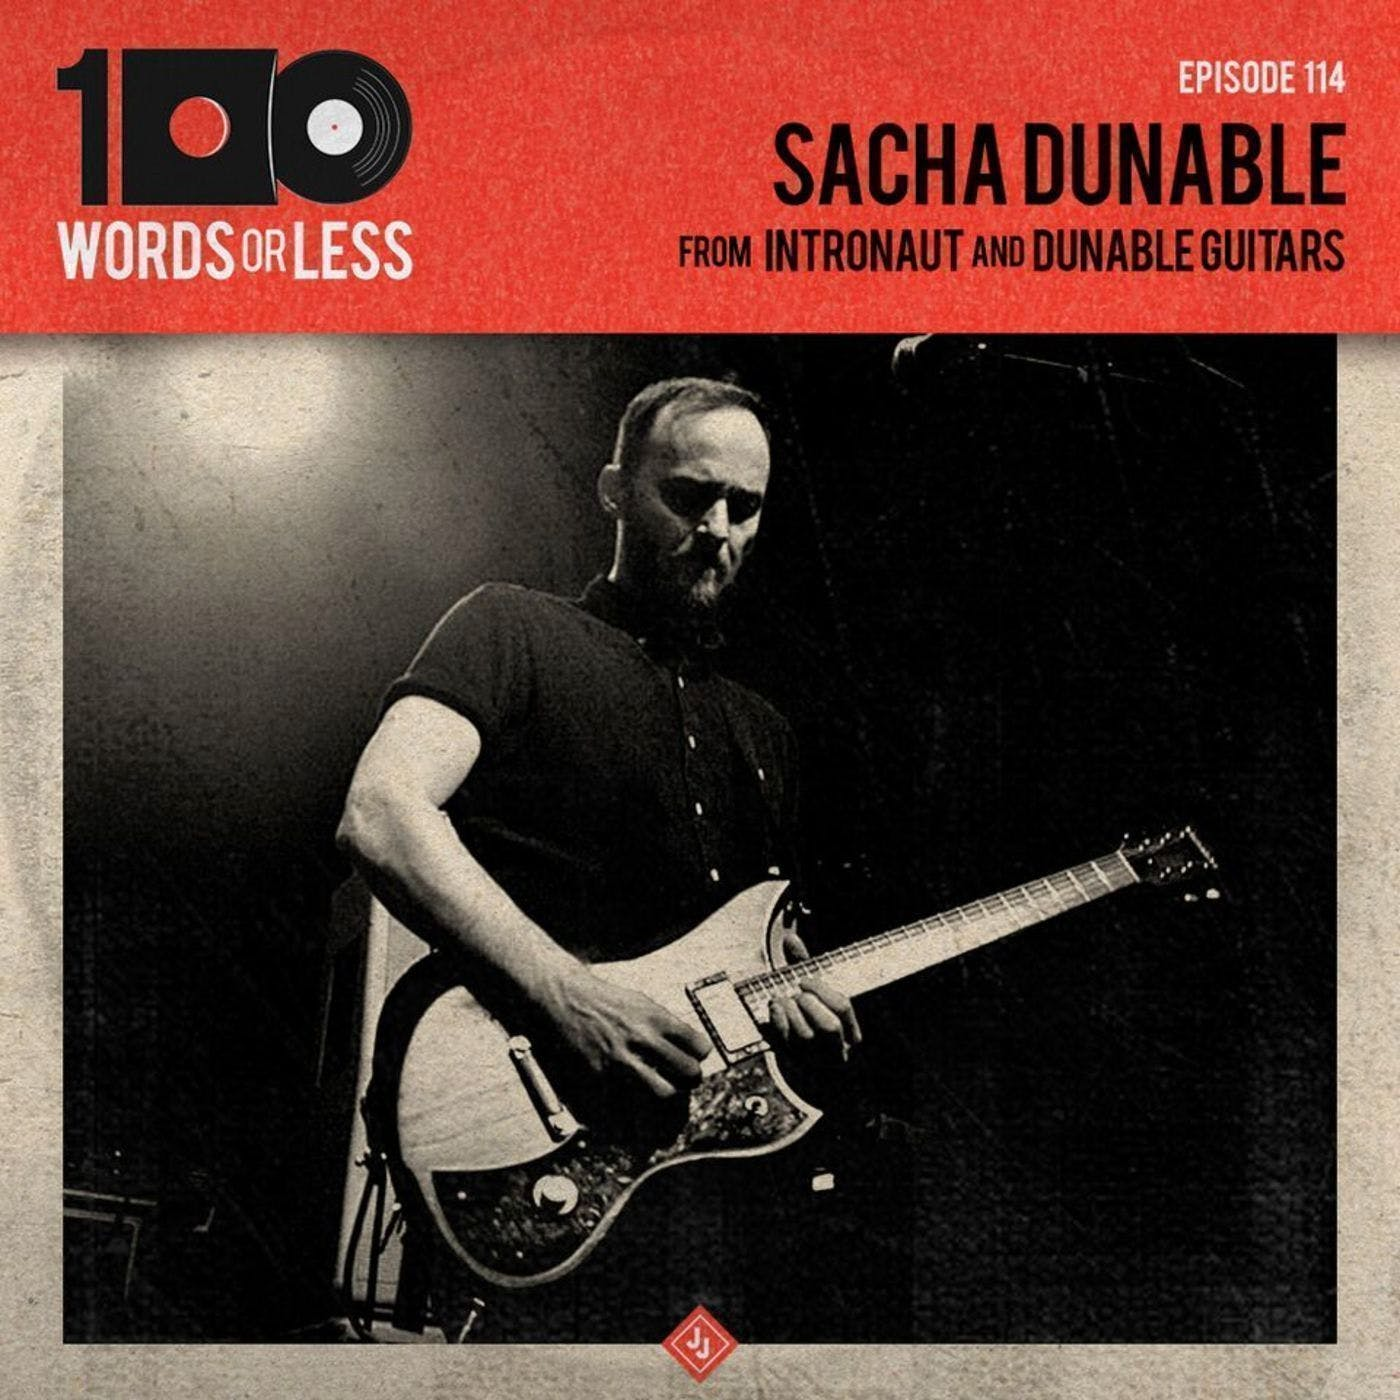  Sacha Dunable from Intronaut